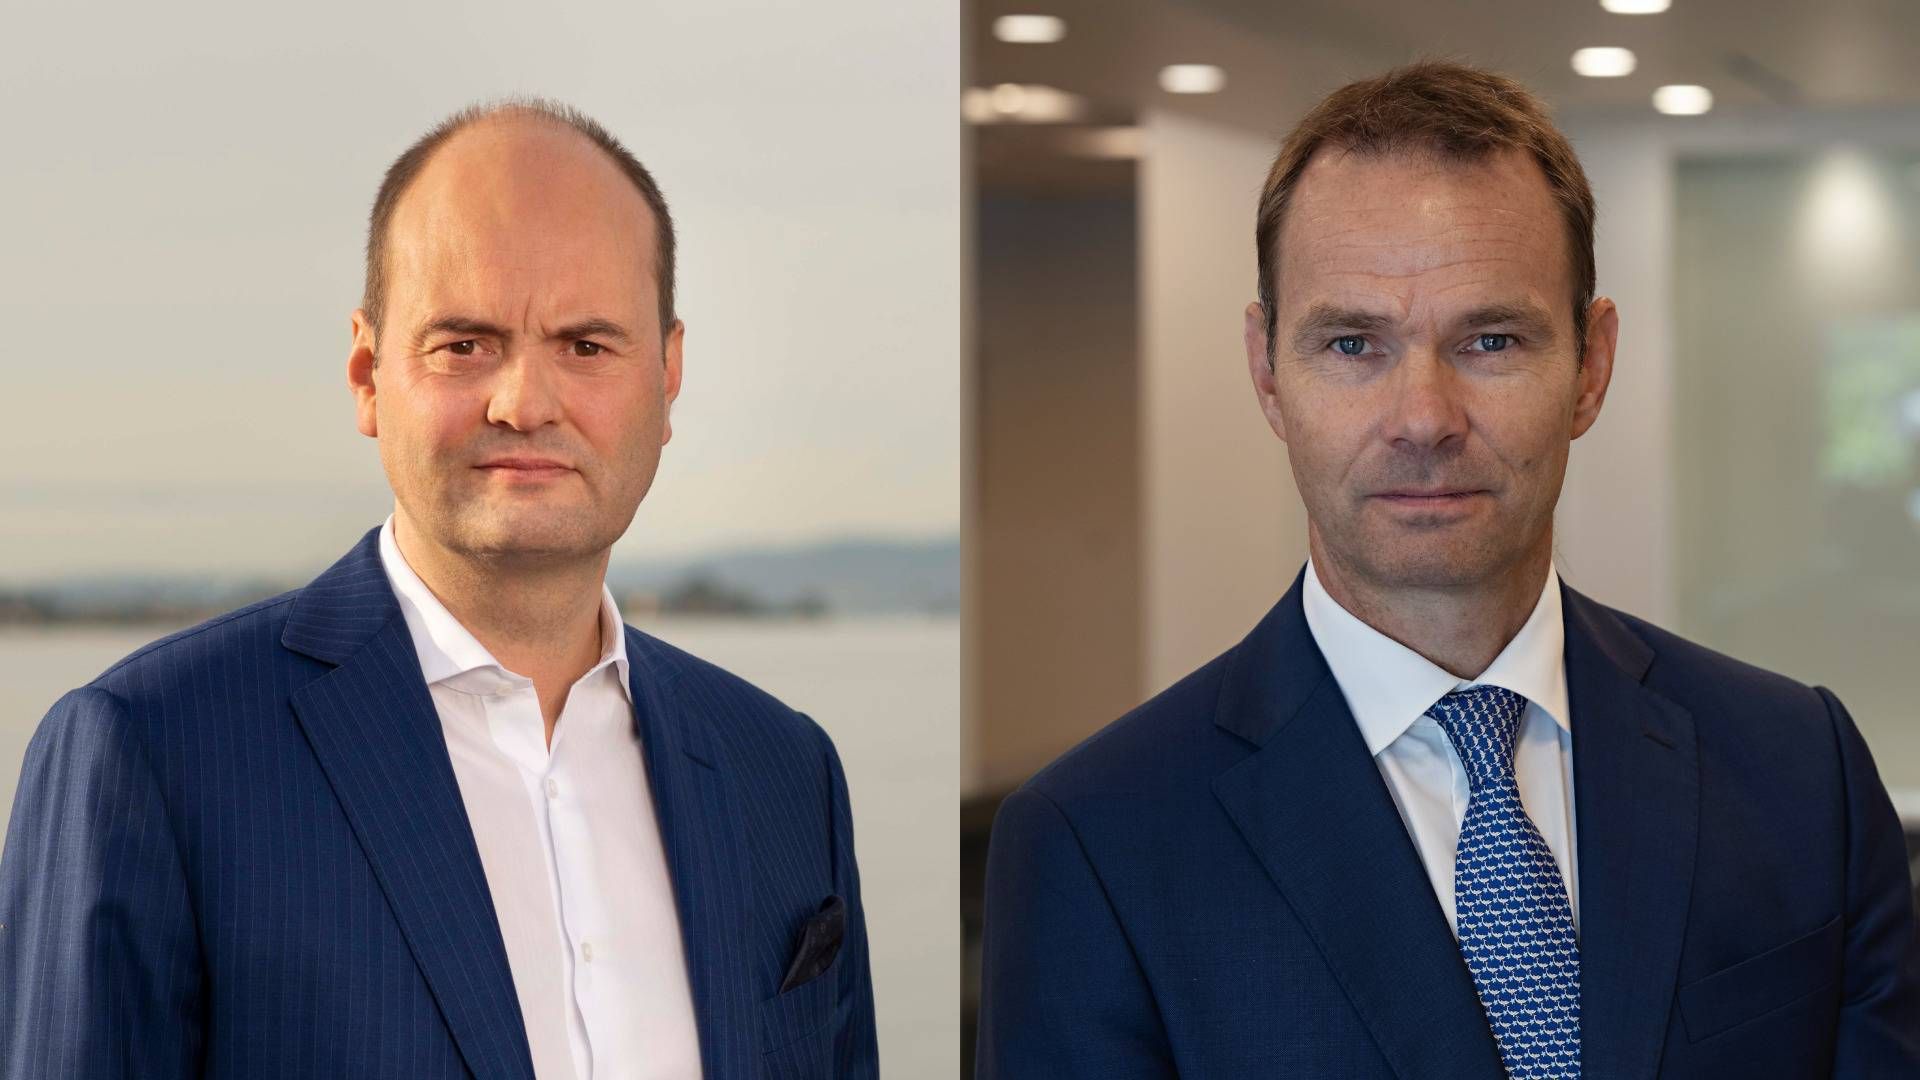 Left: Ståle Hansen CEO of Skuld. Right: Rolf Thore Roppestad CEO of Gard. | Photo: Skuld og Gard